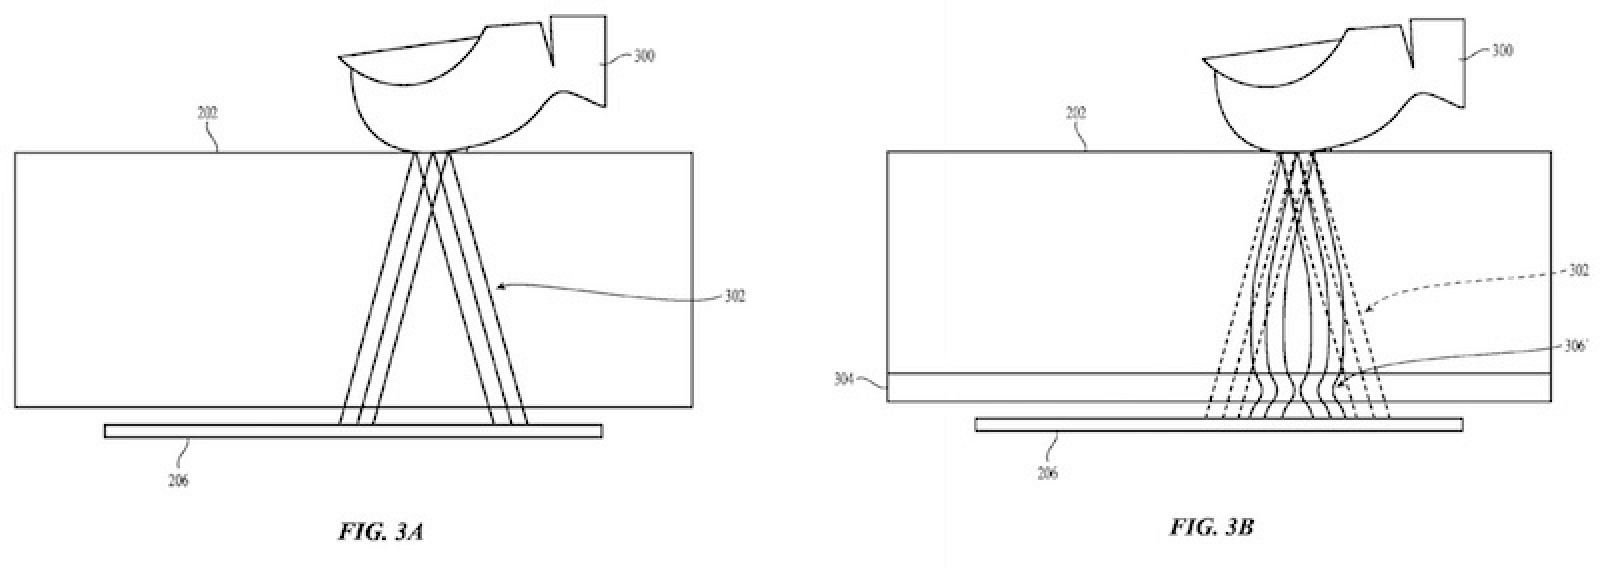 touch-id-sensor-patent-1.jpg